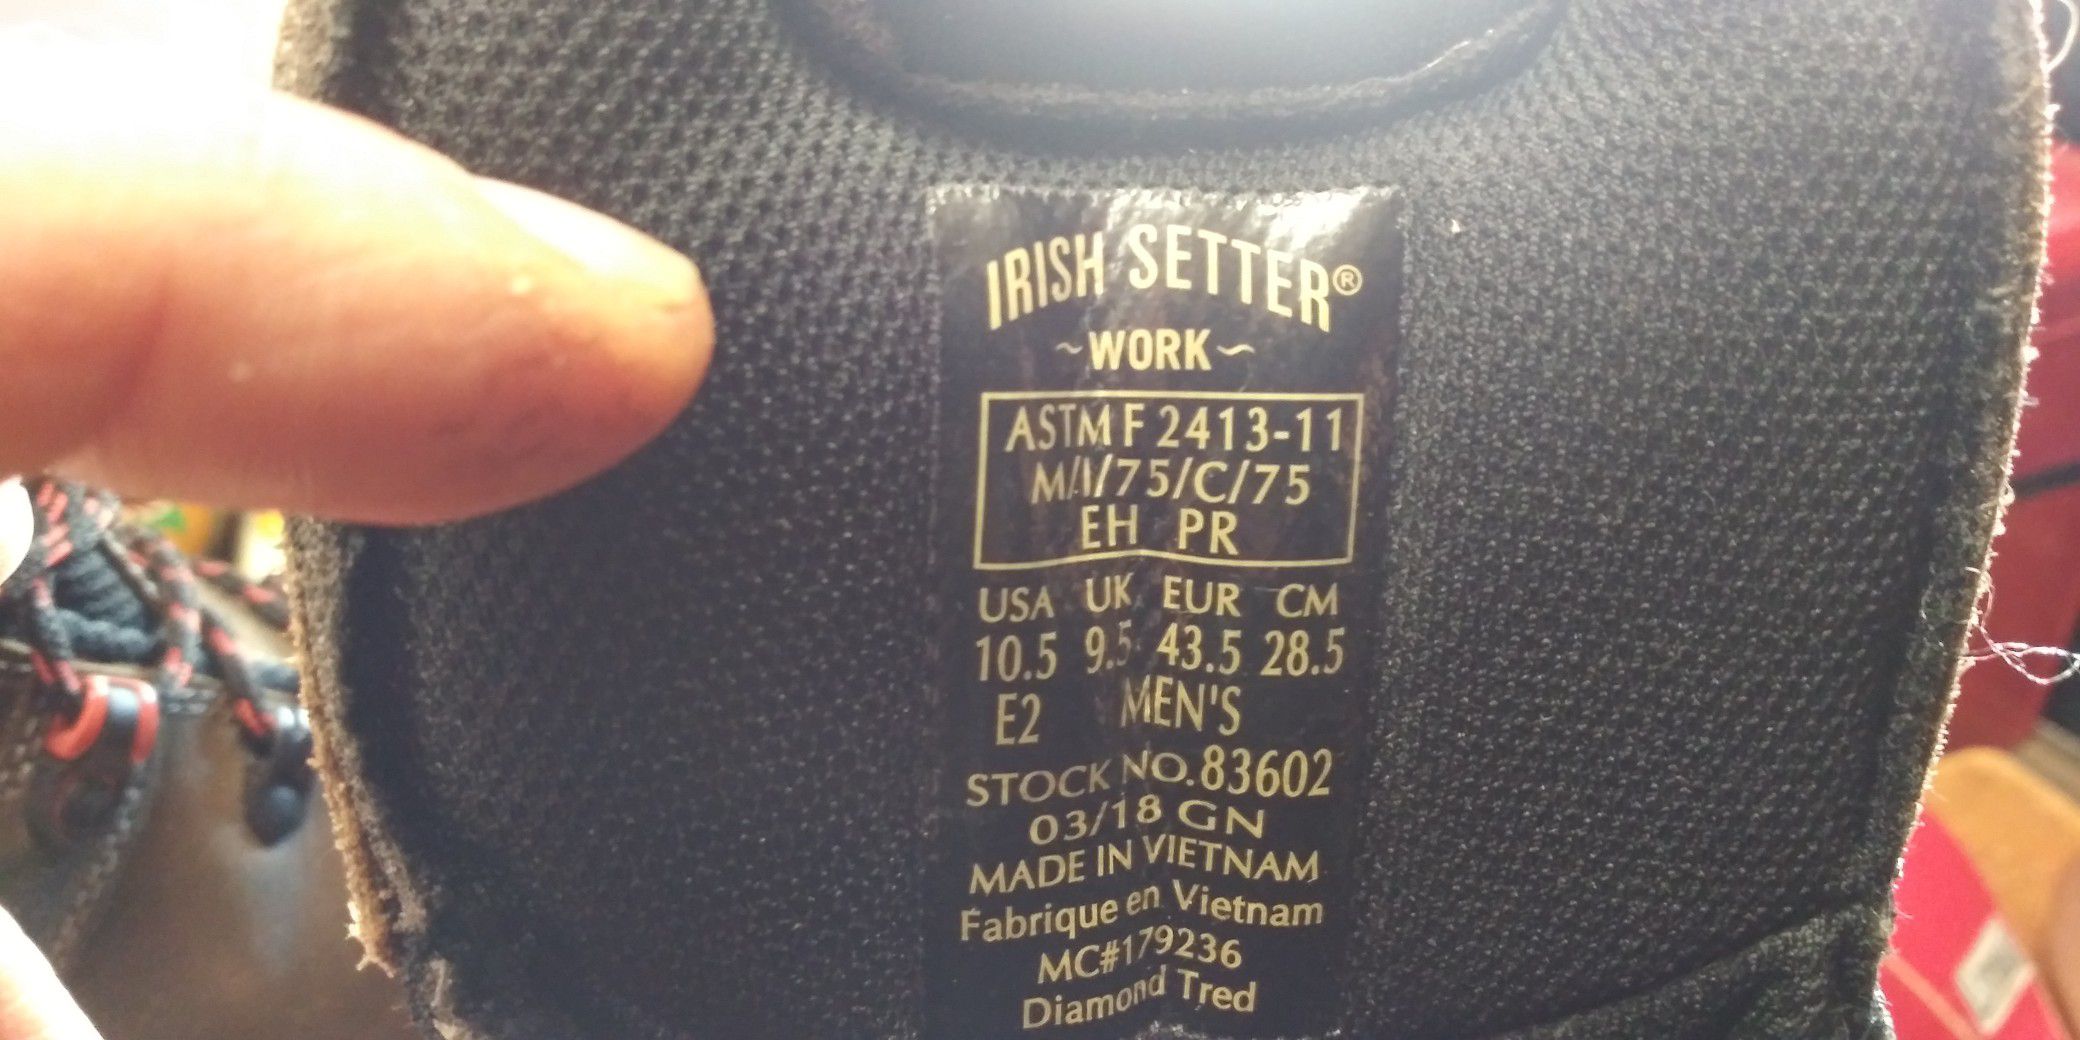 Irish setter work boots